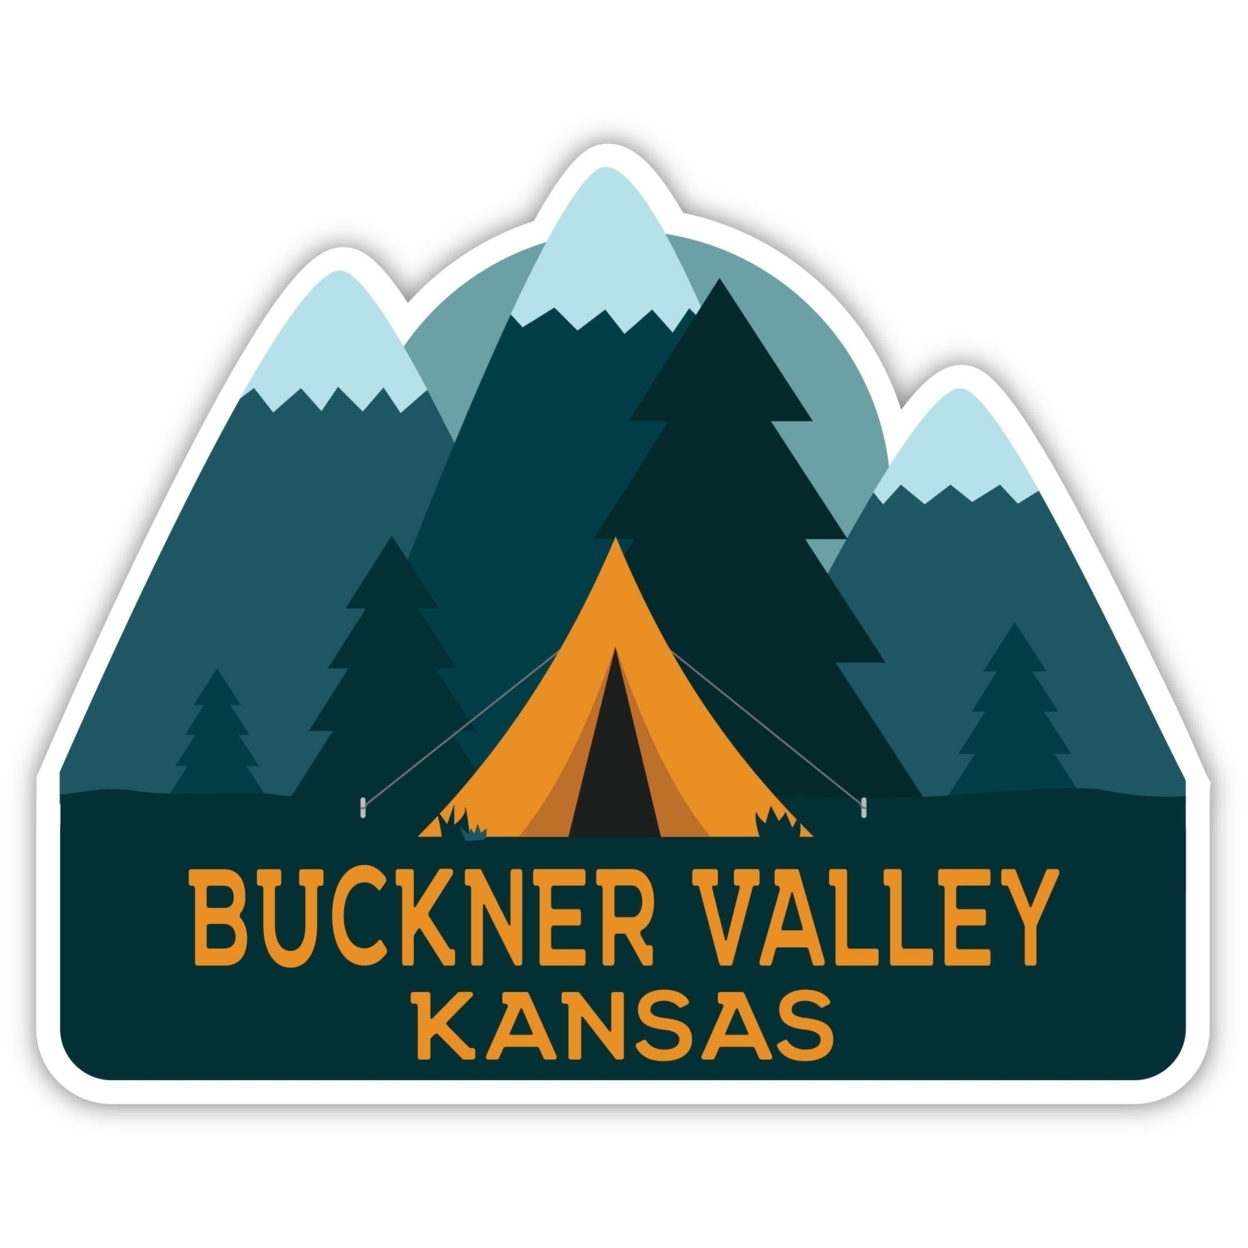 Buckner Valley Kansas Souvenir Decorative Stickers (Choose Theme And Size) - Single Unit, 4-Inch, Tent